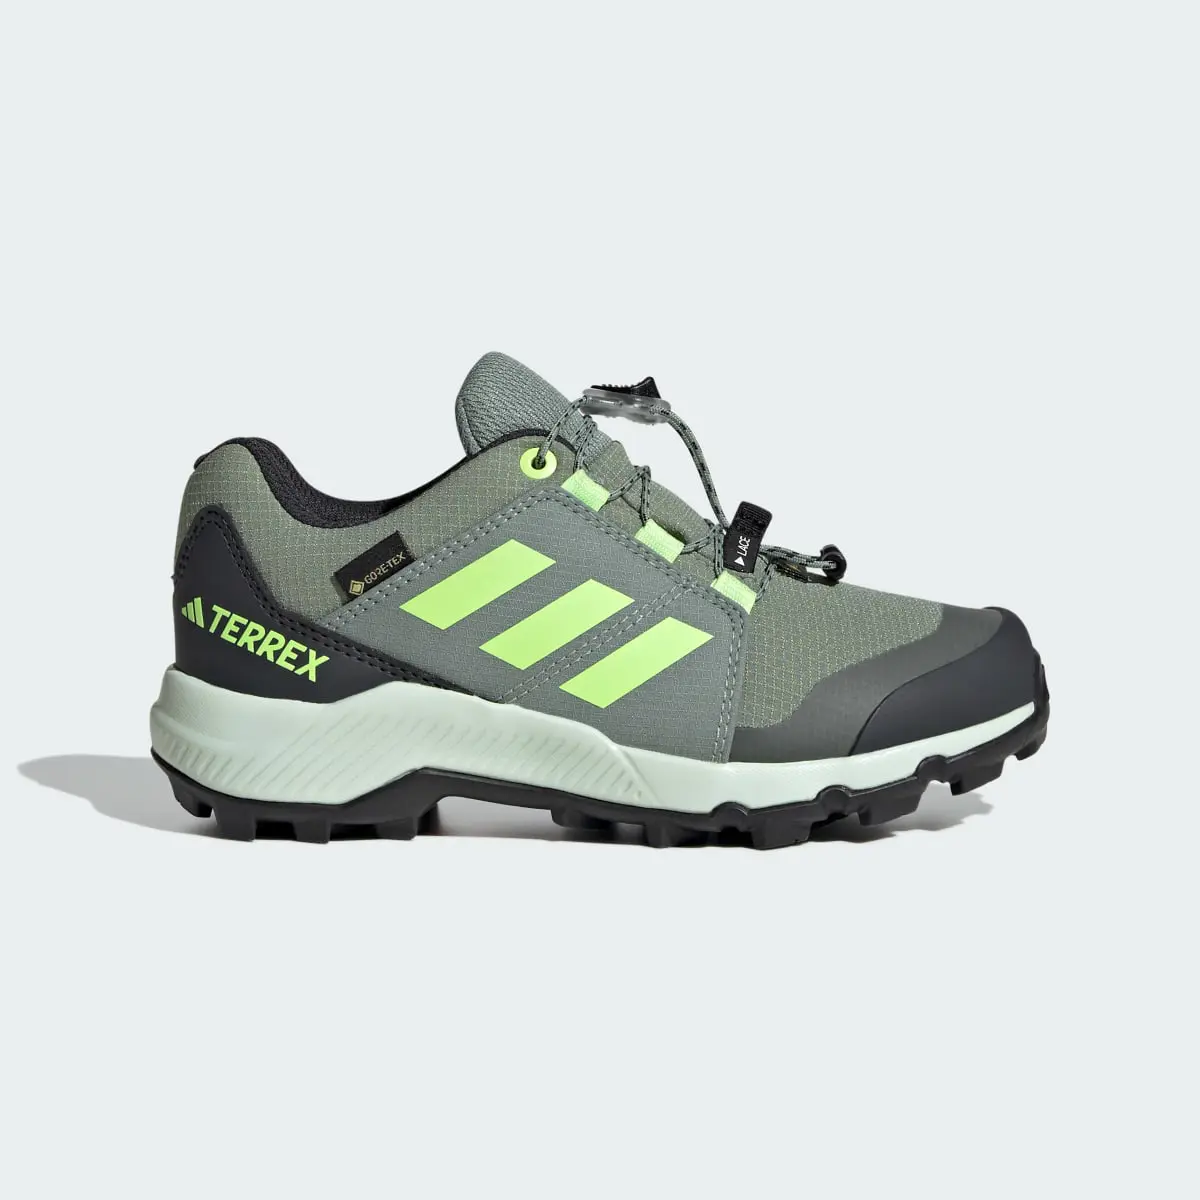 Adidas Terrex GORE-TEX Hiking Shoes. 2